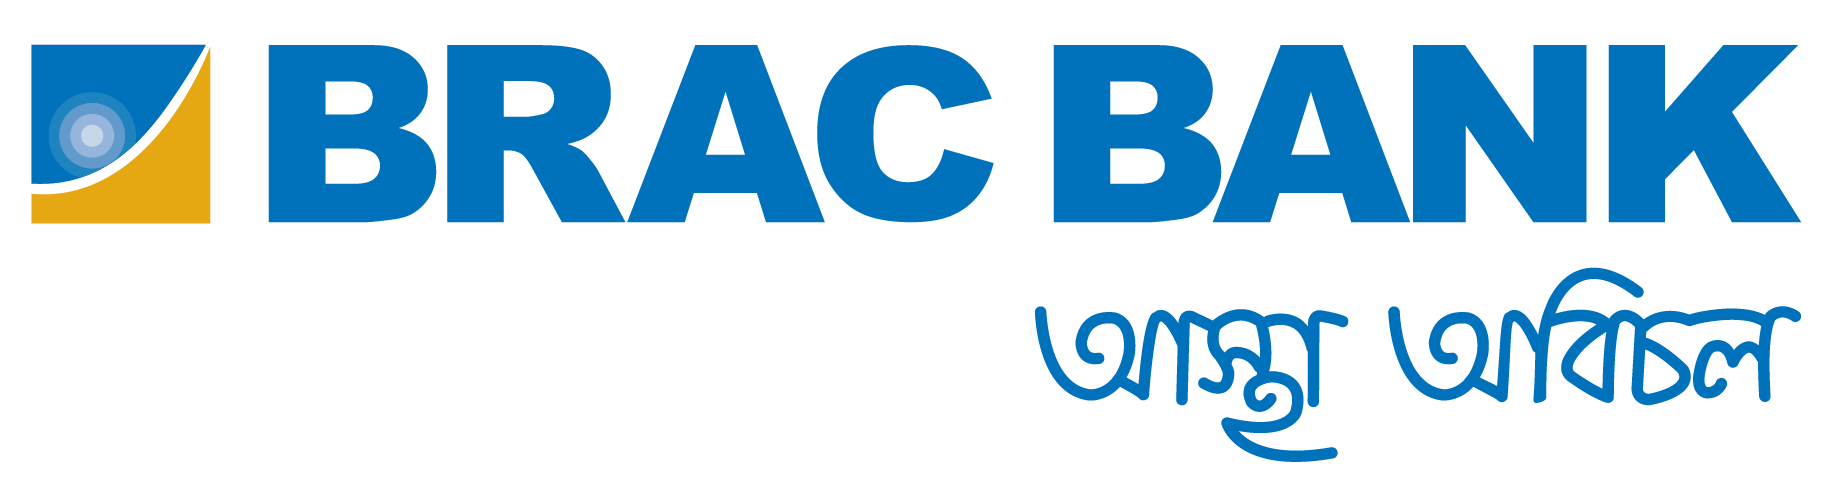 Download Statement Brac Bank Ltd